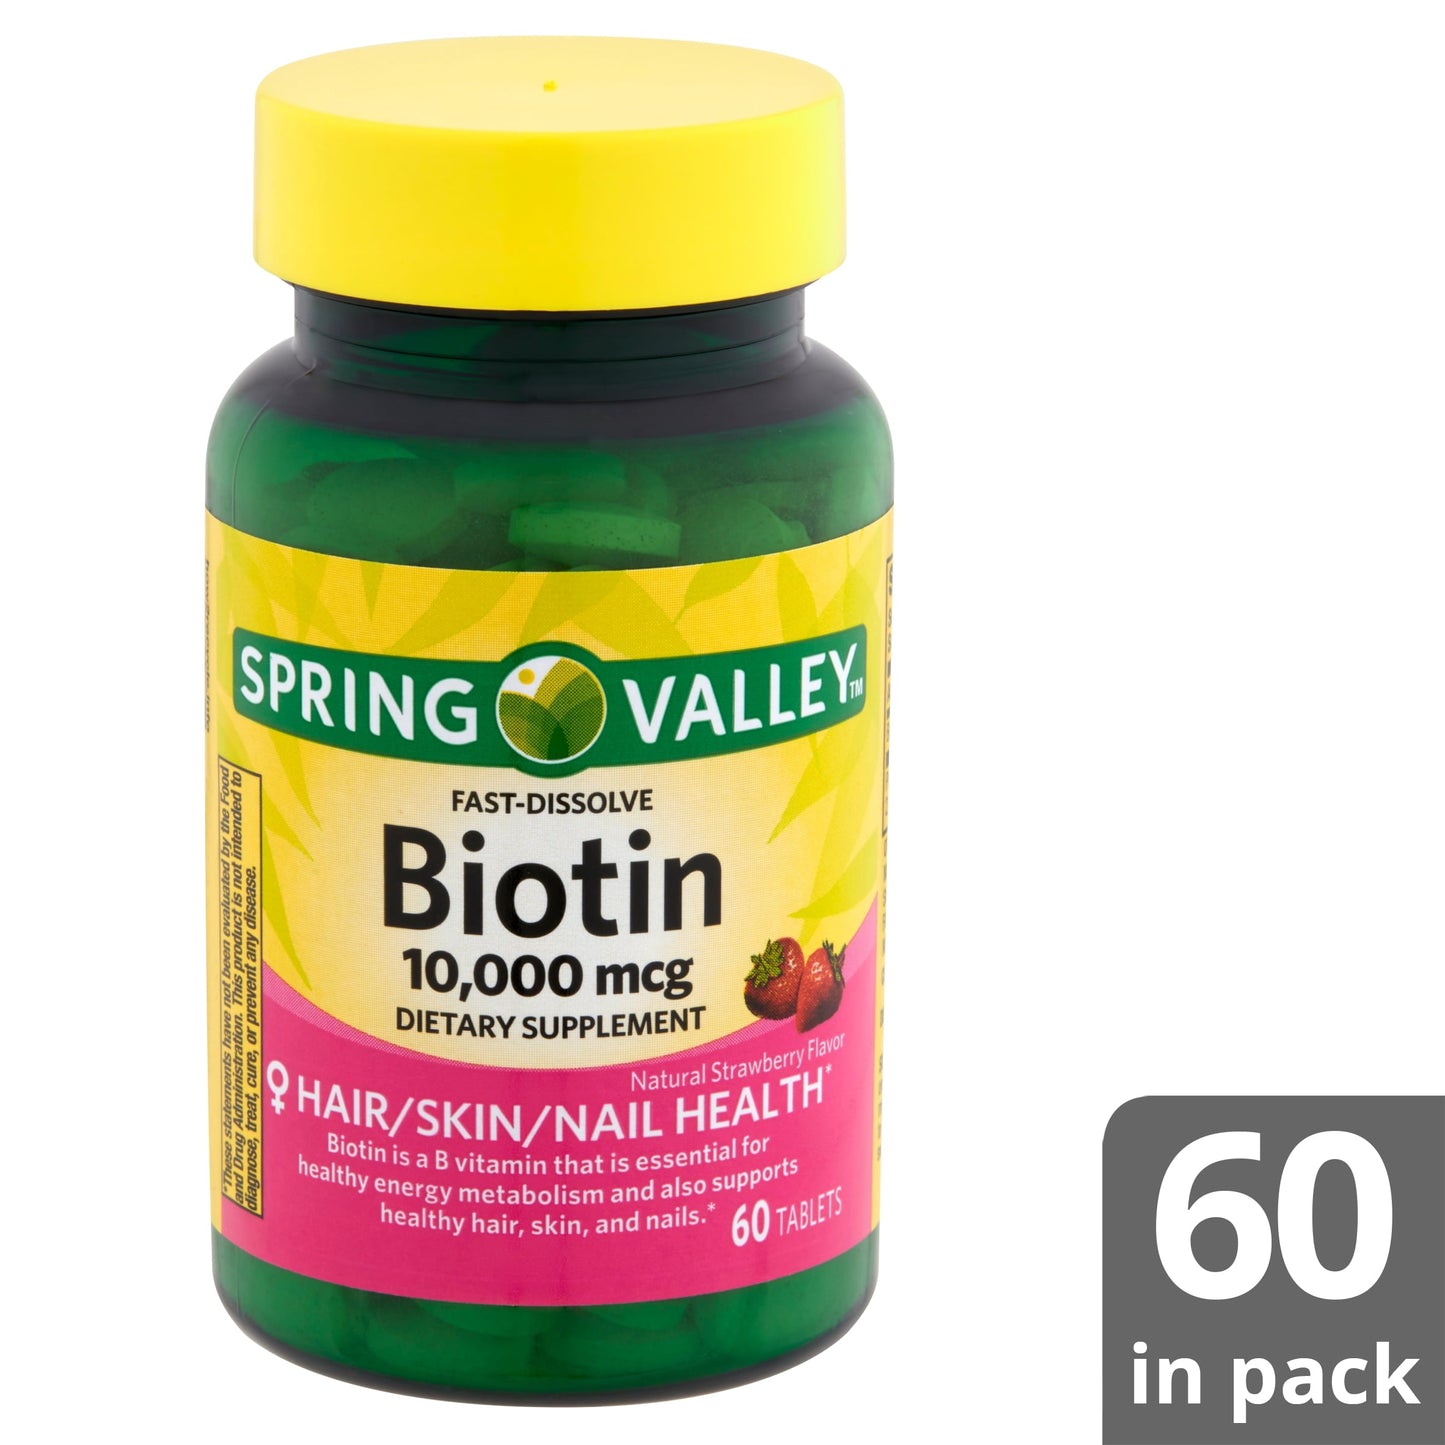 Spring Valley Fast-Dissolve Biotin Dietary Supplement, 10,000 mcg, 60 Count